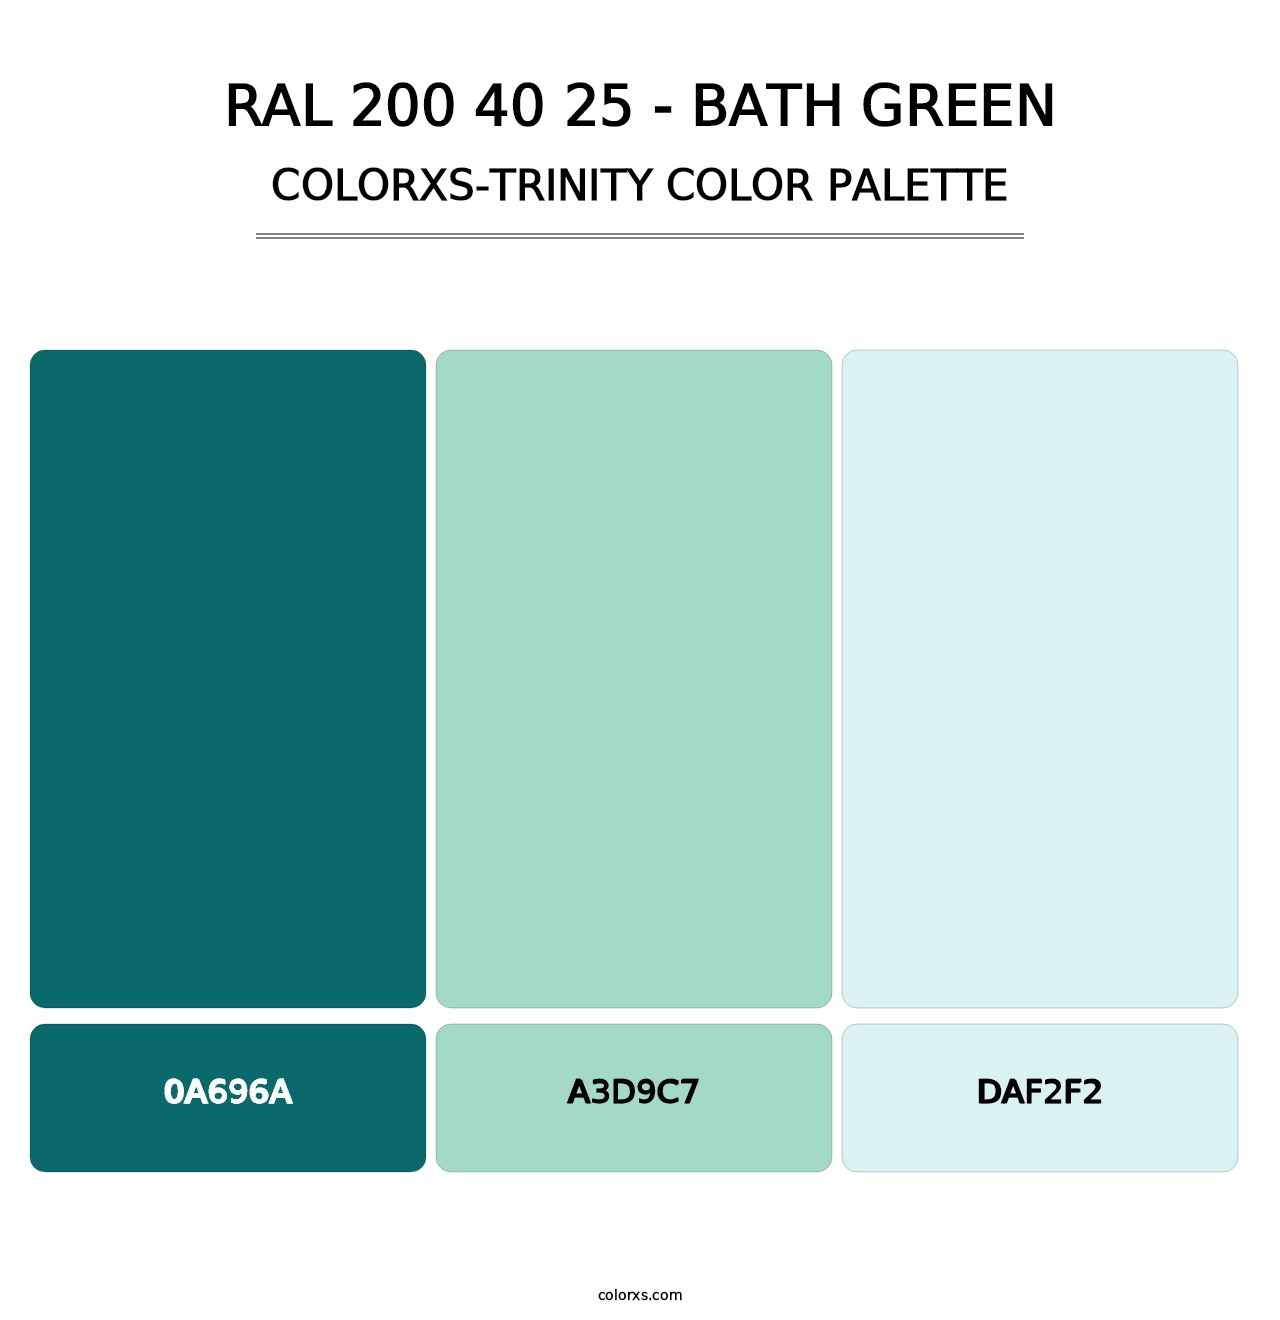 RAL 200 40 25 - Bath Green - Colorxs Trinity Palette